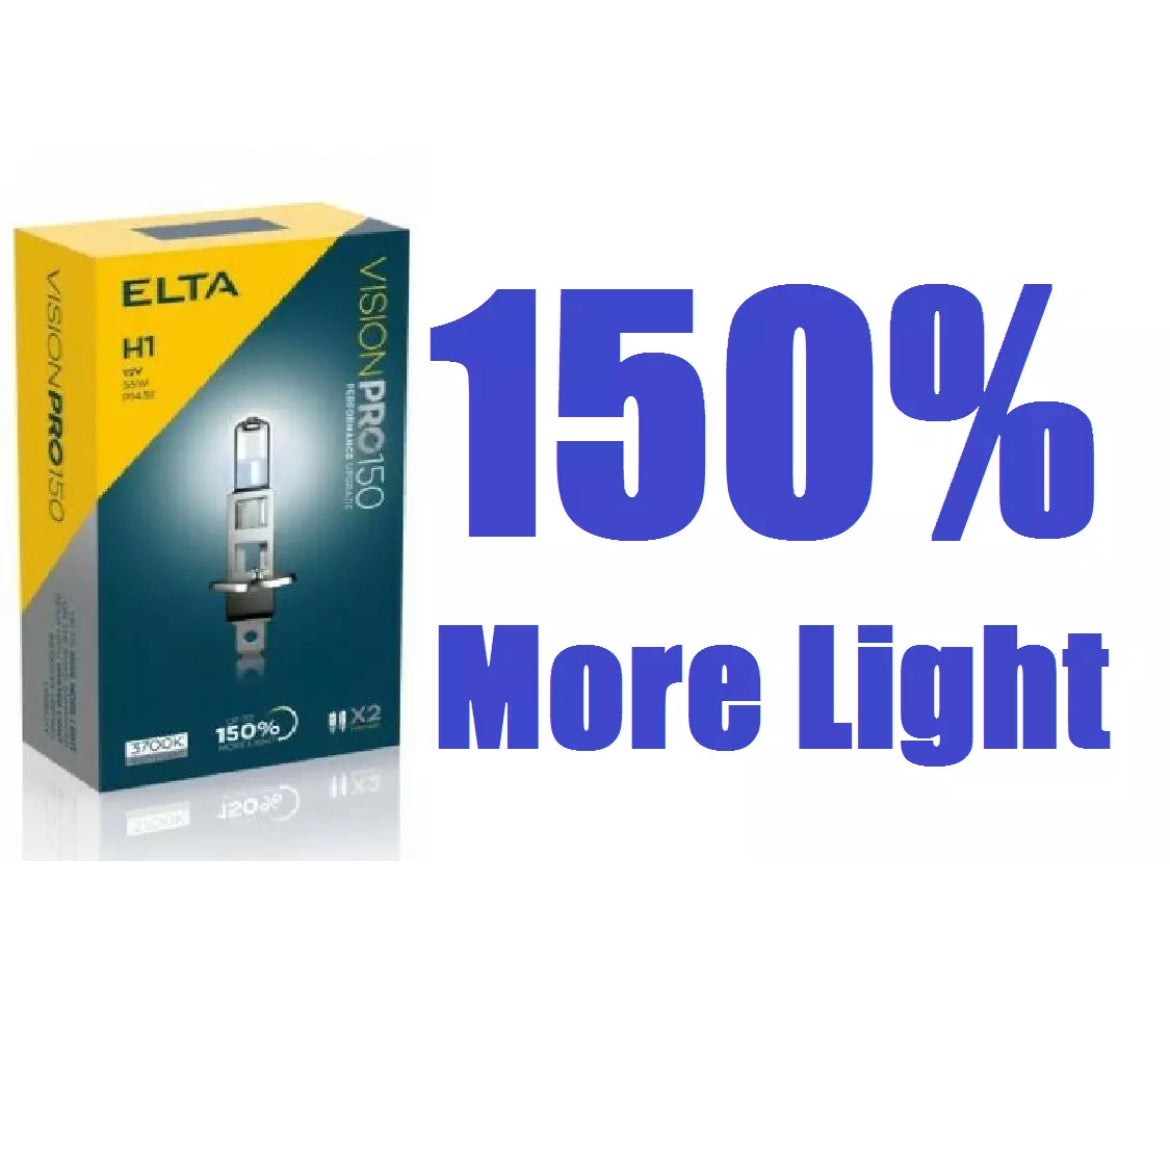 H1 headlight bulbs 150% more light.